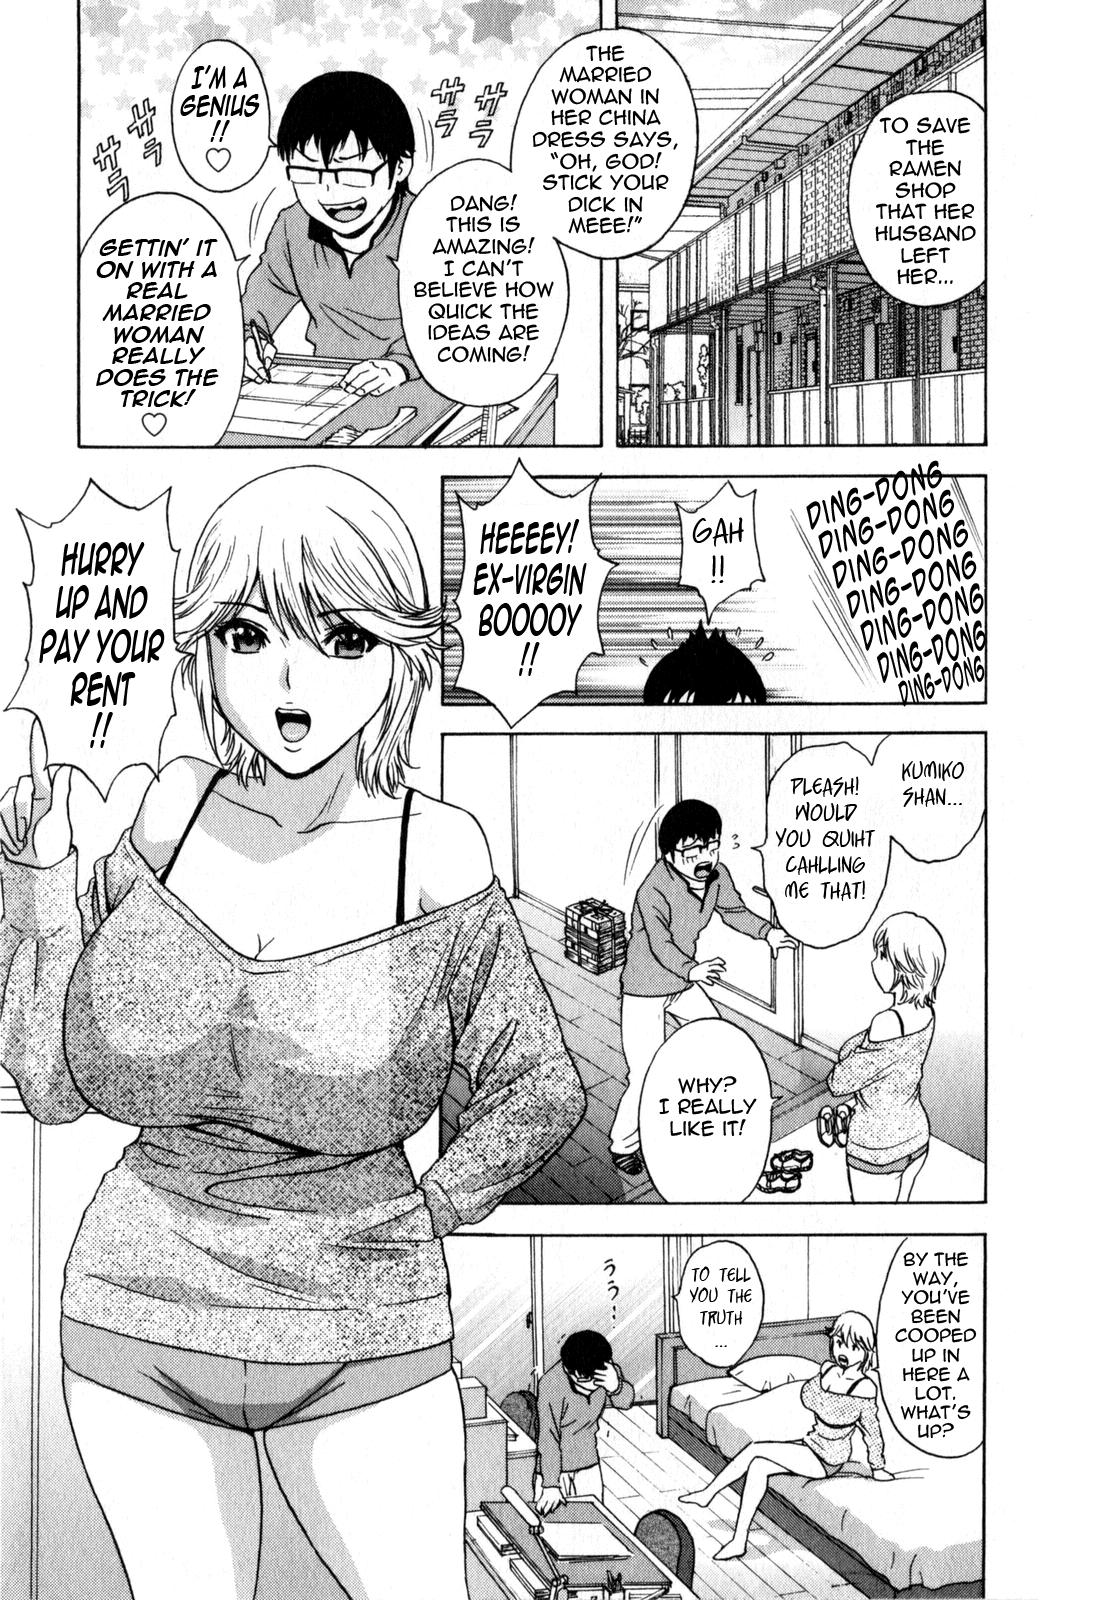 [Hidemaru] Life with Married Women Just Like a Manga 2 - Ch. 1-8 [English] {Tadanohito} 58